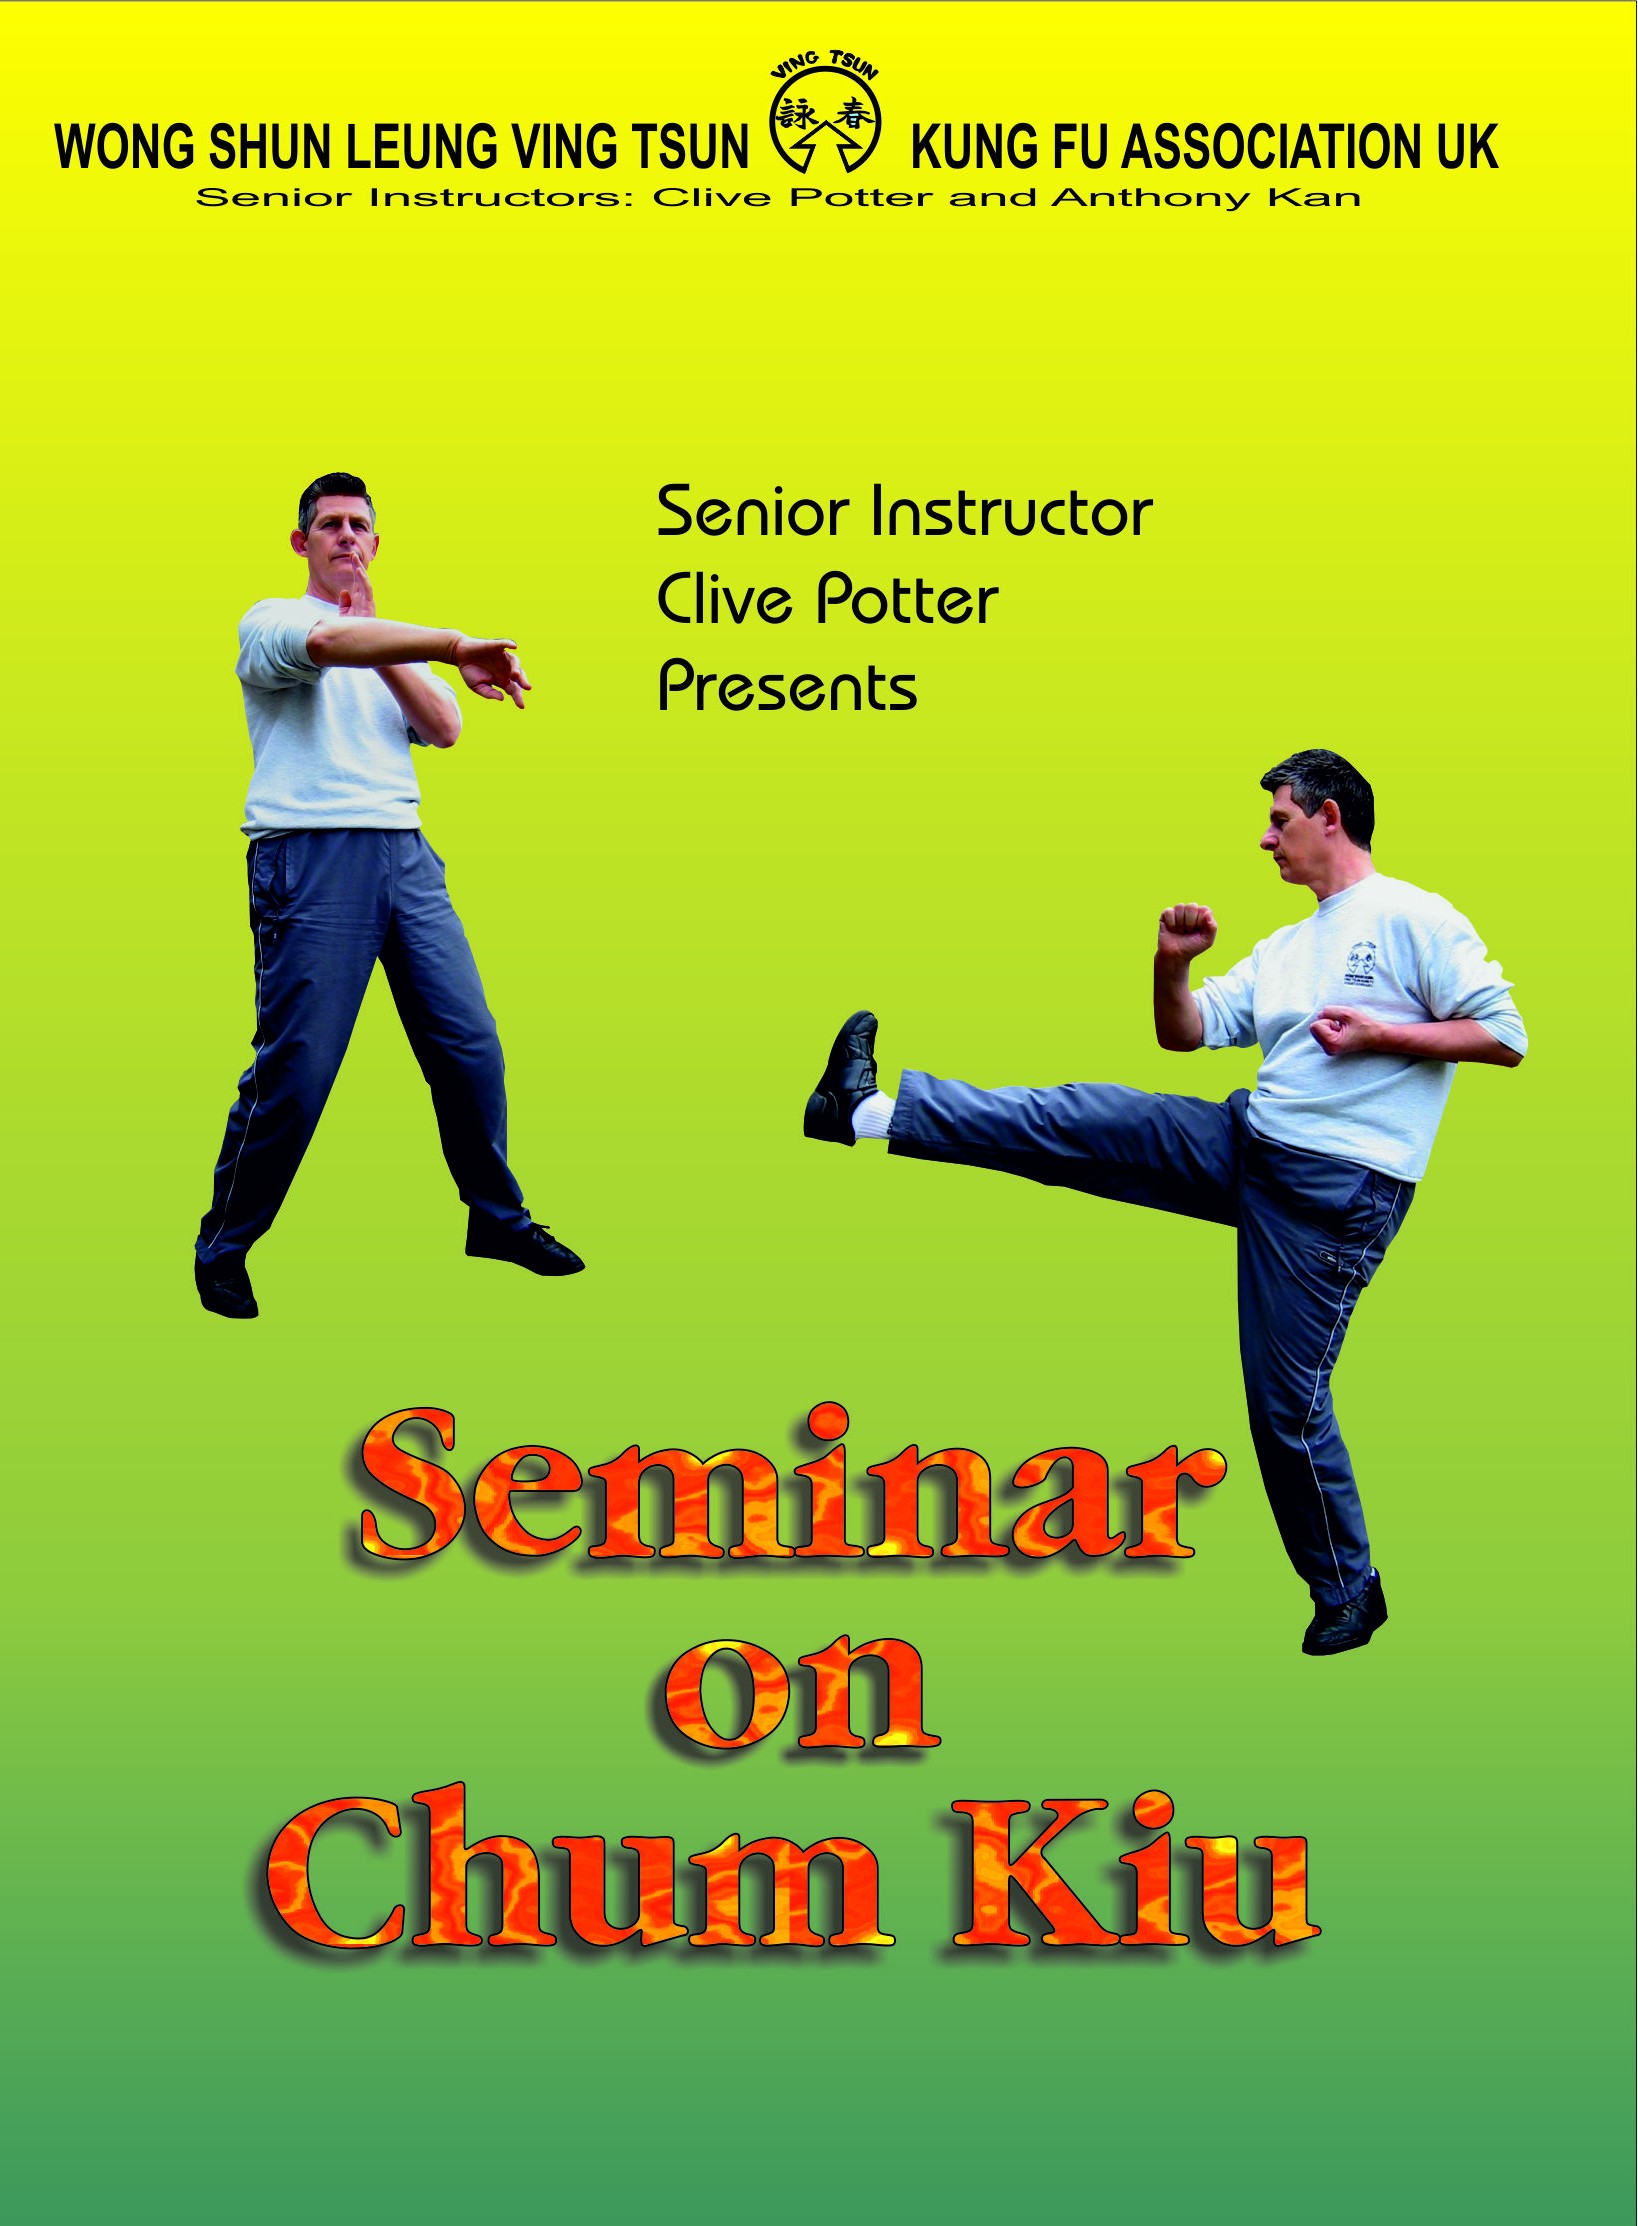 Review – Clive Potter’s Seminar on Chum Kiu DVD